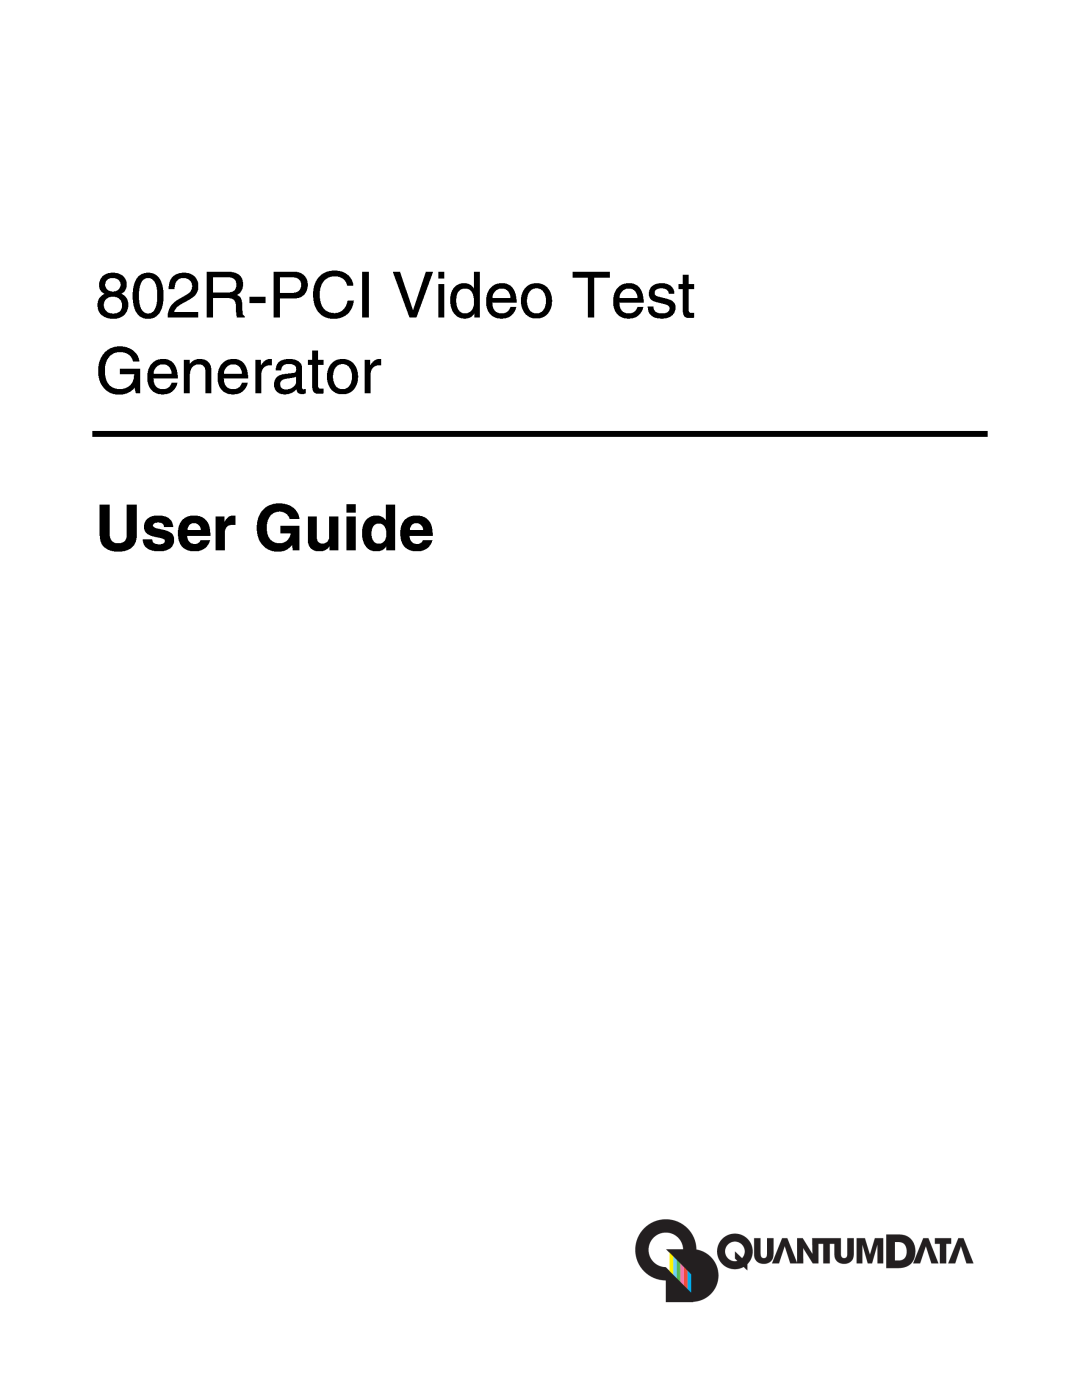 Quantum Data manual 802R-PCI Video Test Generator, User Guide 